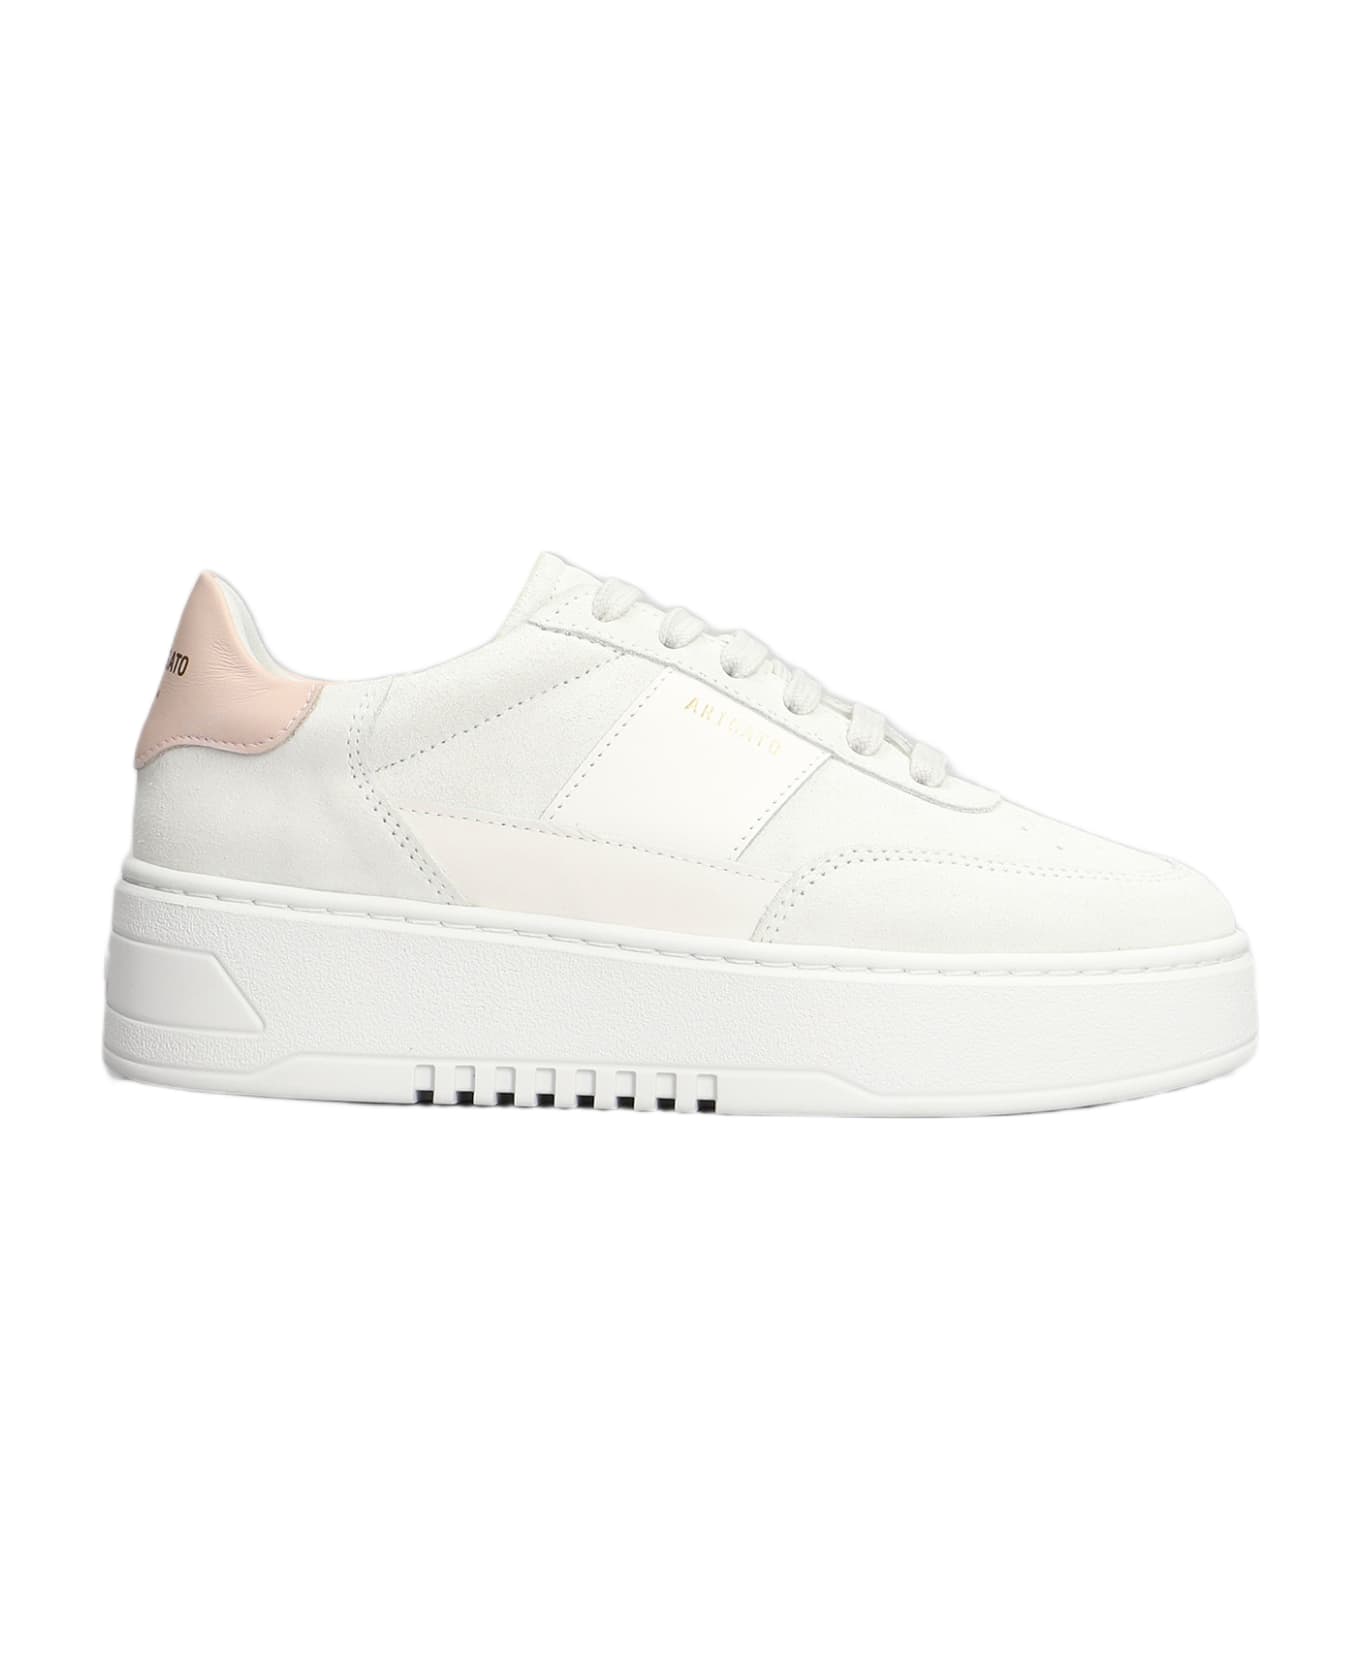 Axel Arigato Orbit Vintage Sneakers In White Suede - white